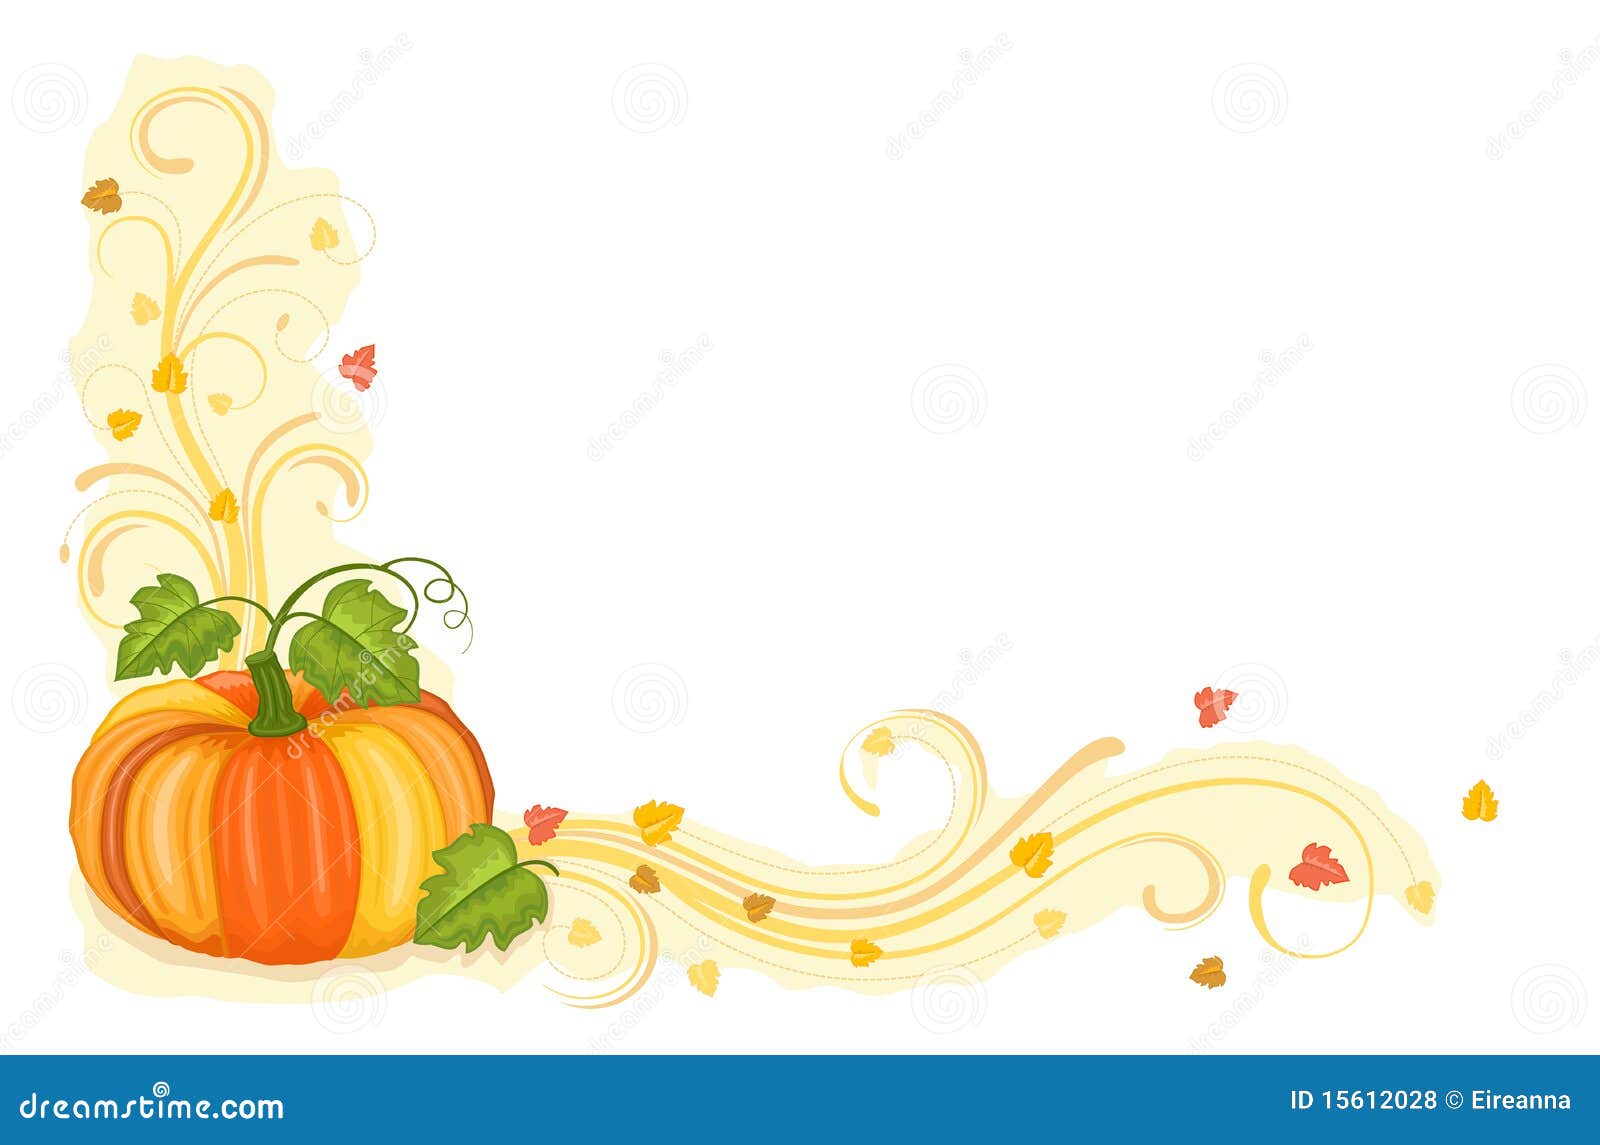 Autumn Harvest With Tasty Pumpkin Royalty Free Stock Photos Image